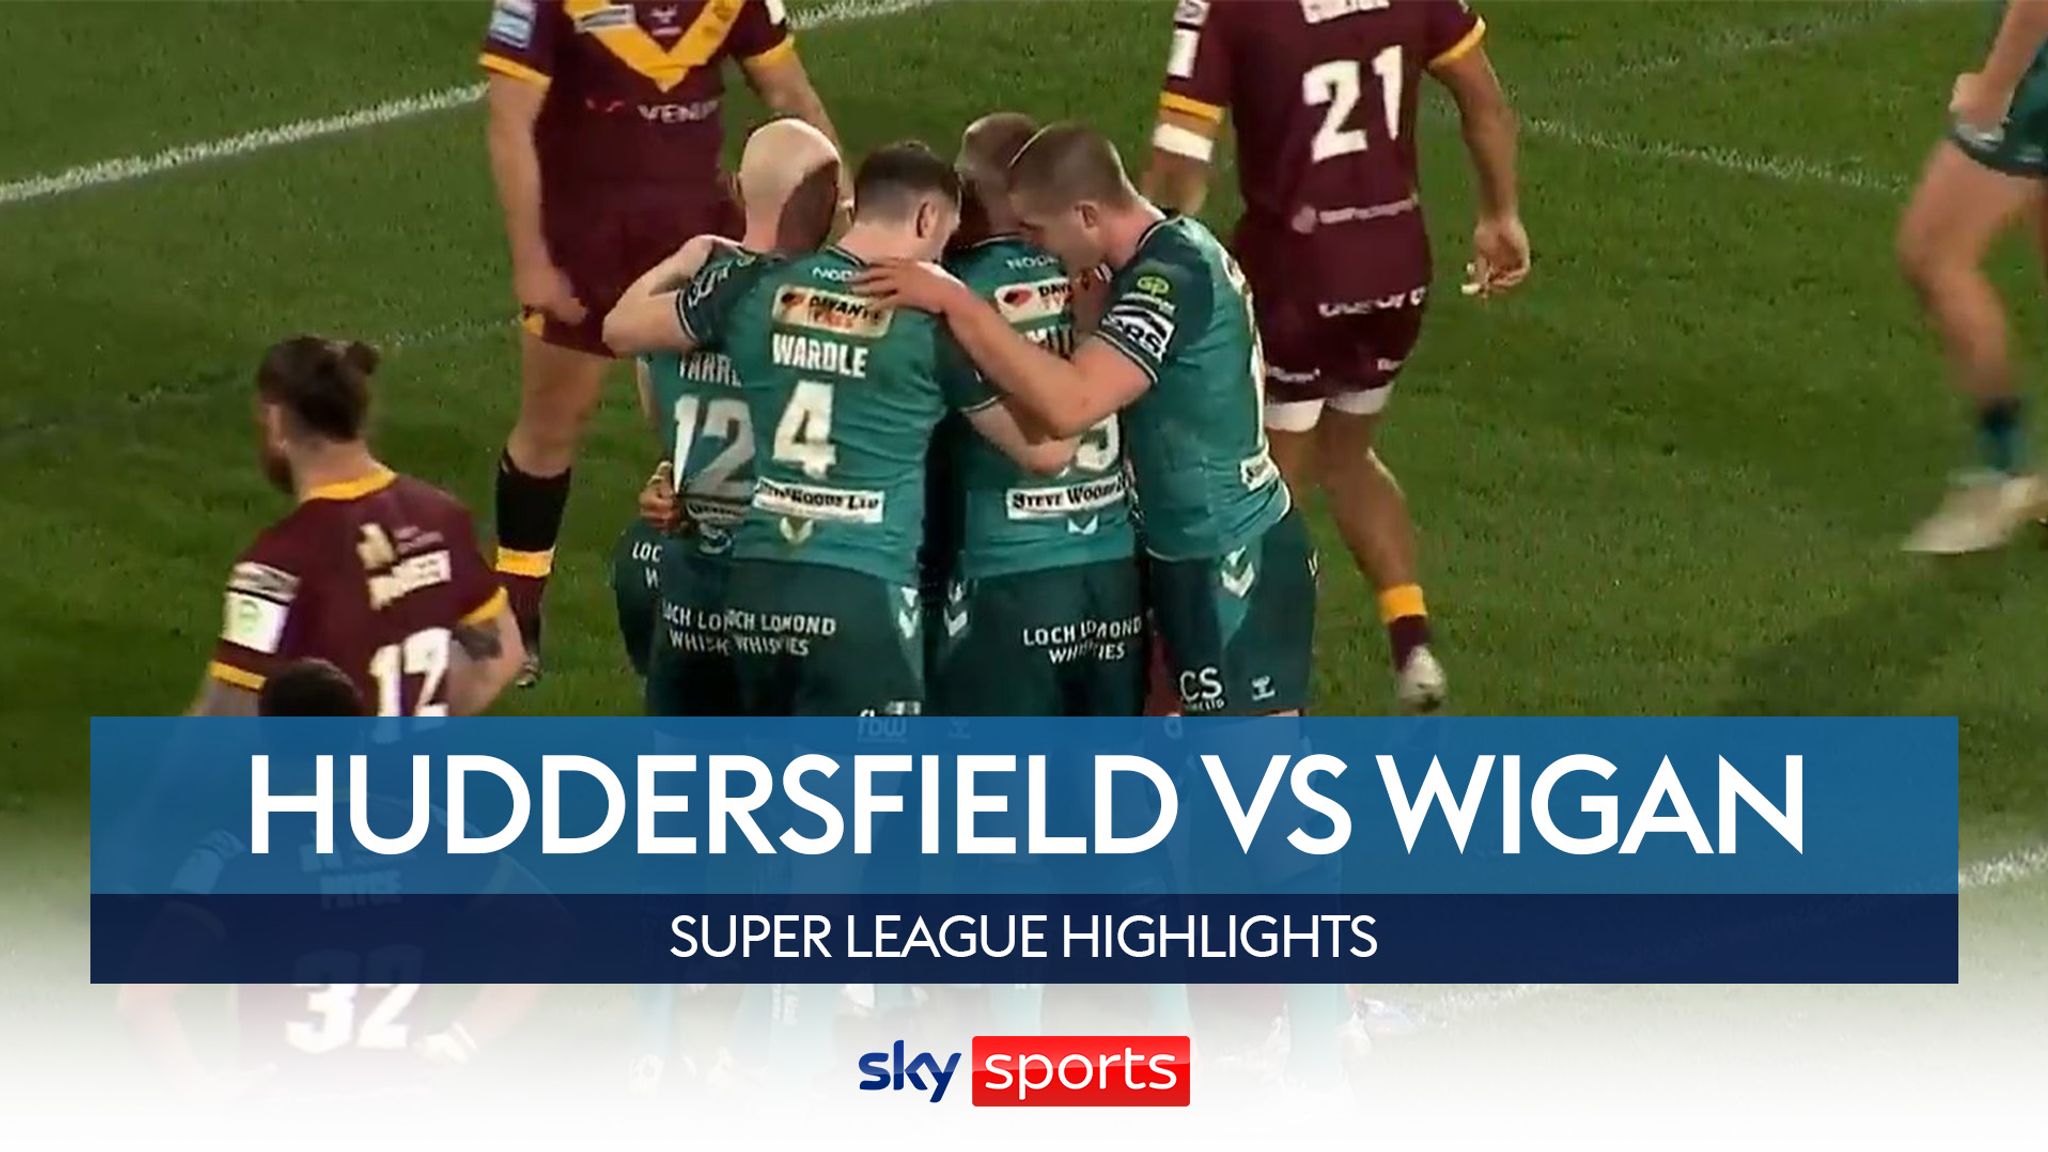 Huddersfield 12-14 Wigan Super League highlights Video Watch TV Show Sky Sports